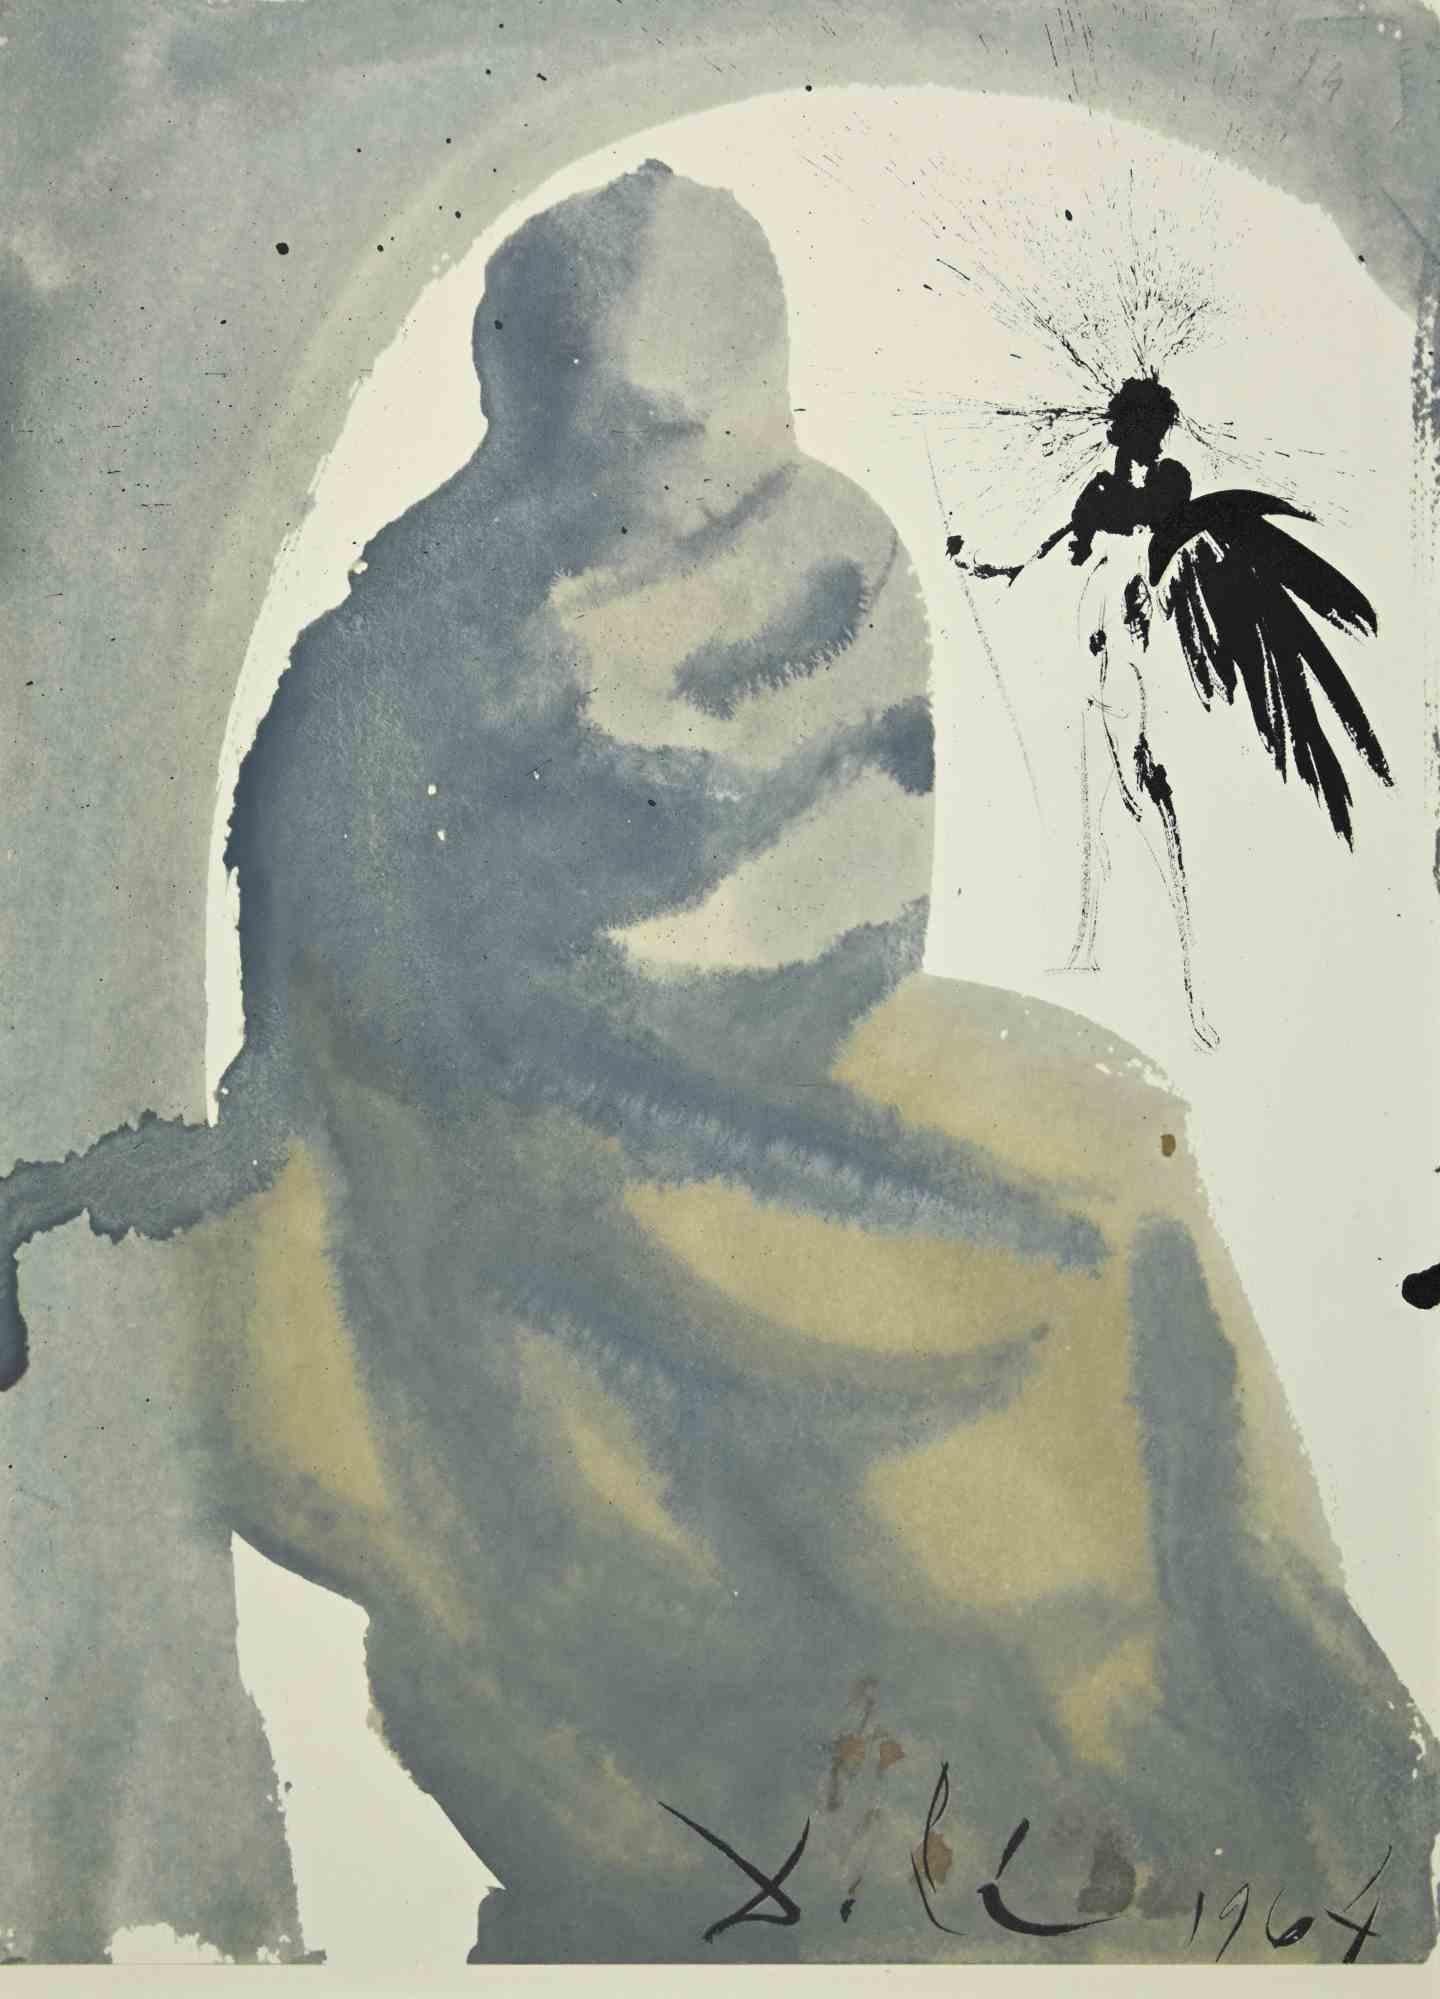 Salvador Dalí Print - Seduxisti Me, Domine - Lithograph - 1964